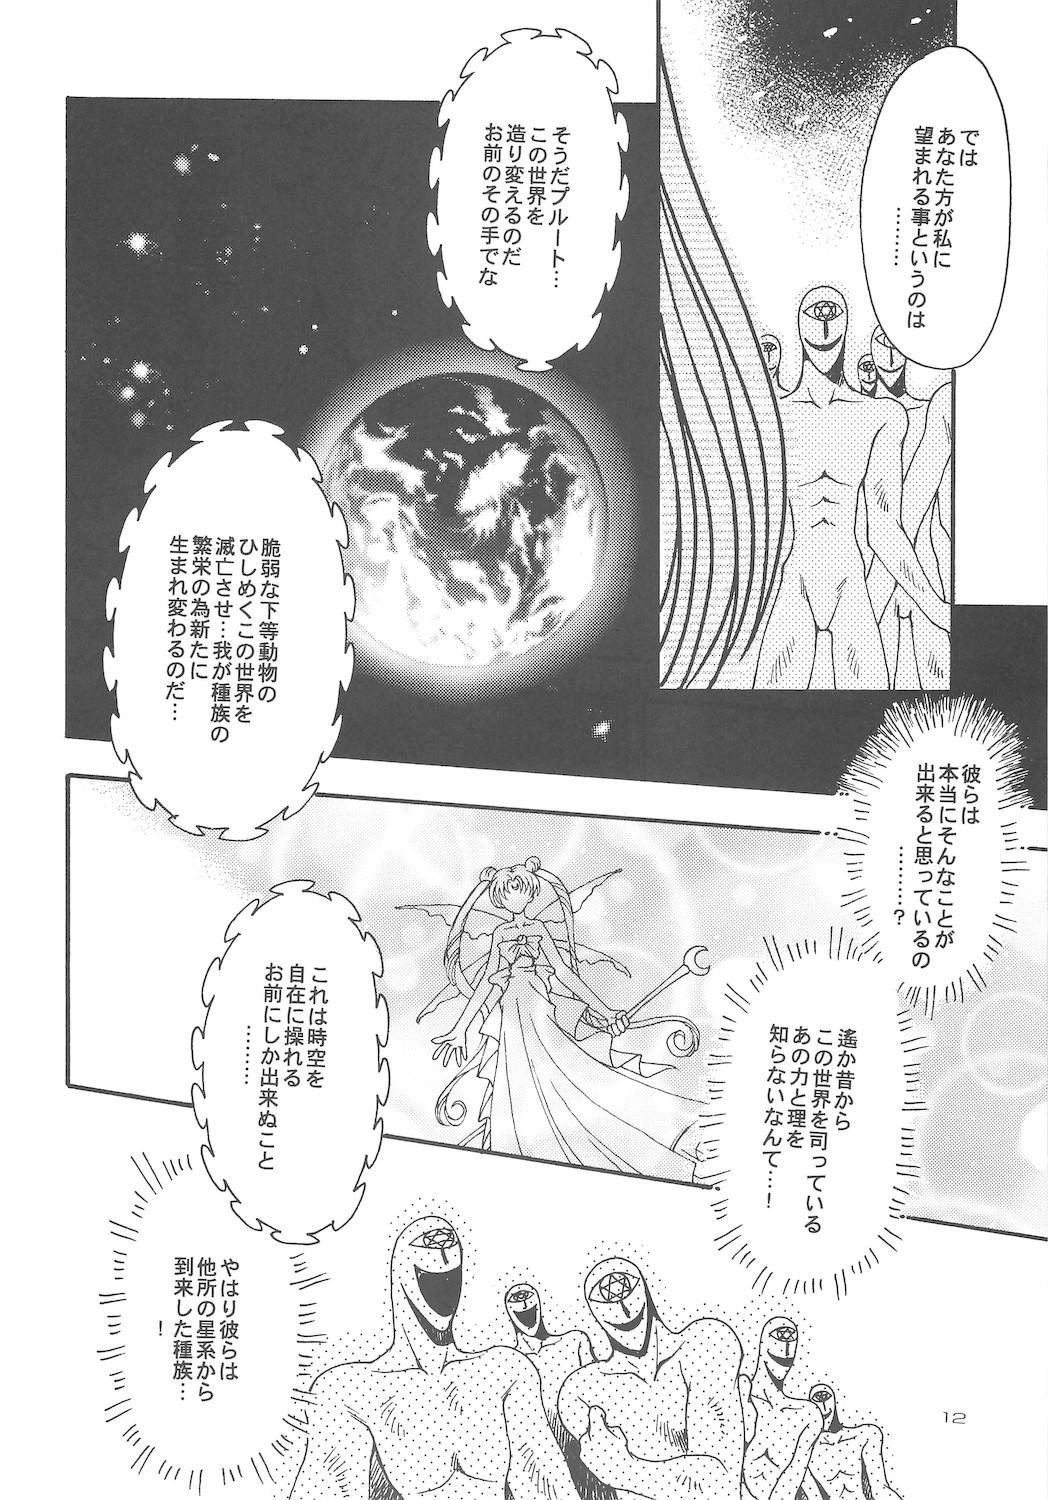 Glamour Owaru Sekai dai 4 shou - Sailor moon Piroca - Page 12